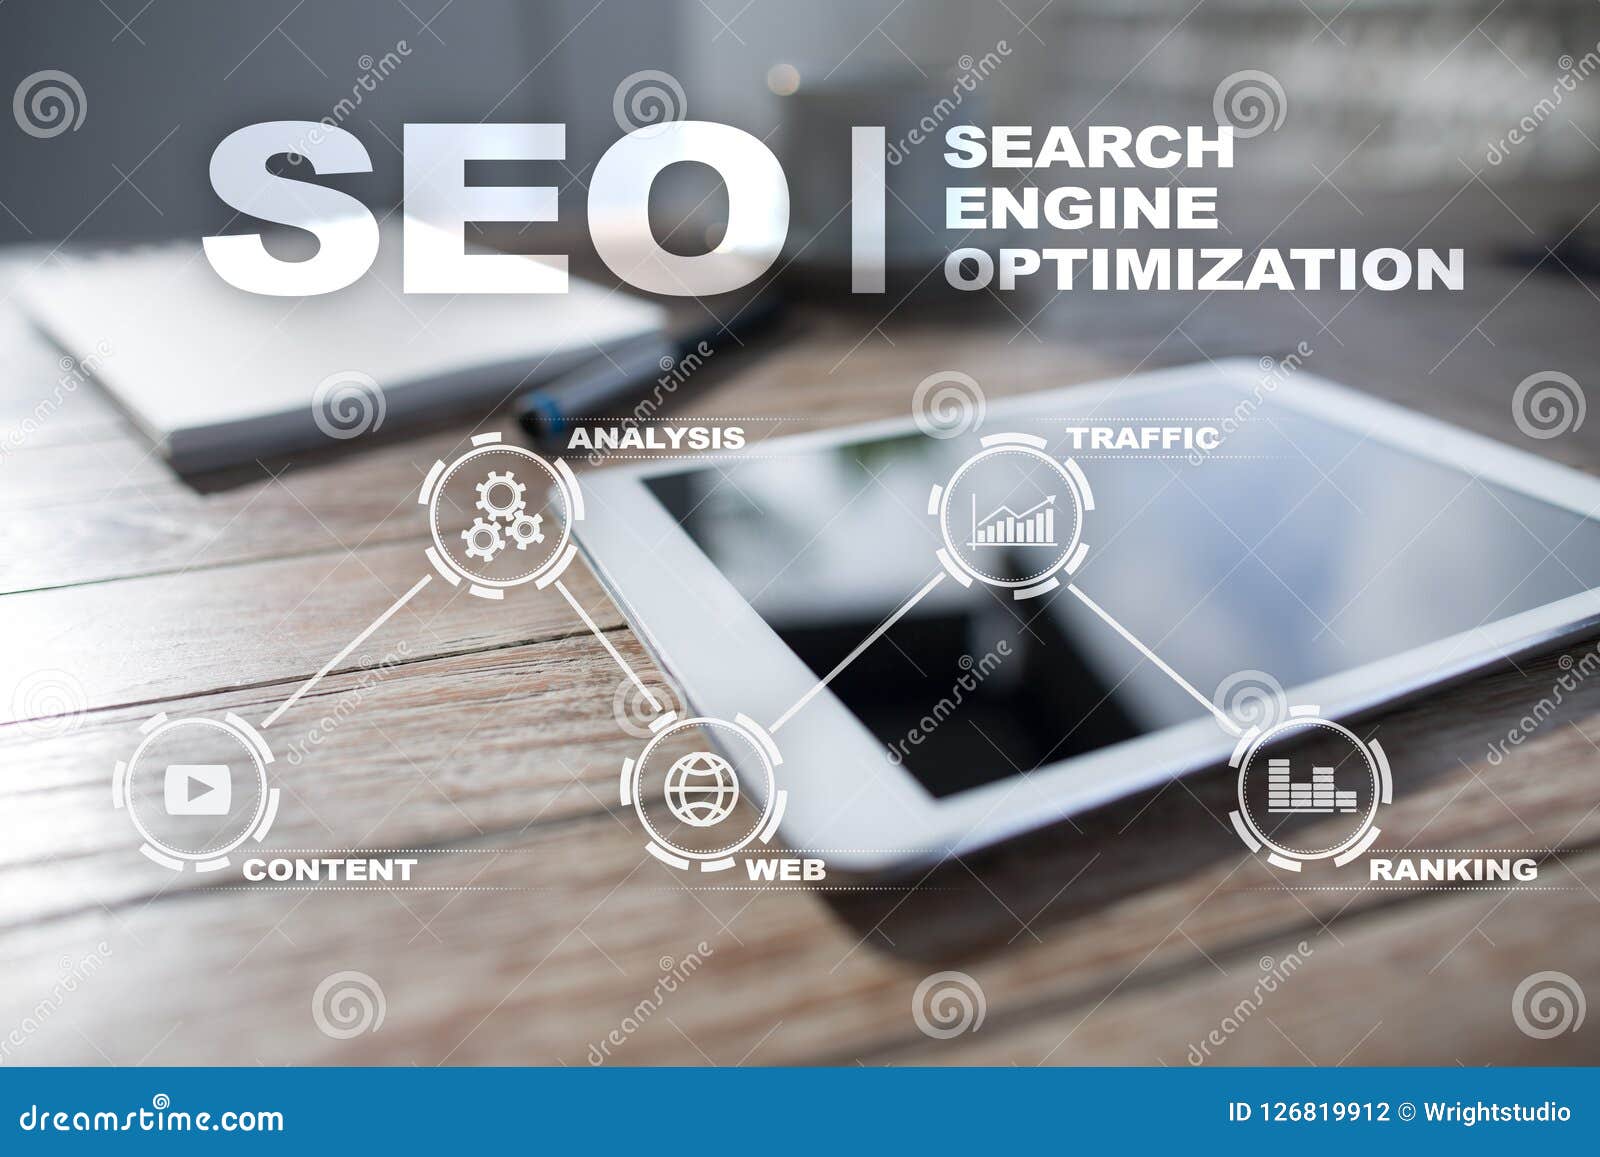 seo. search engine optimization. digital online marketing andinetrmet technology concept.